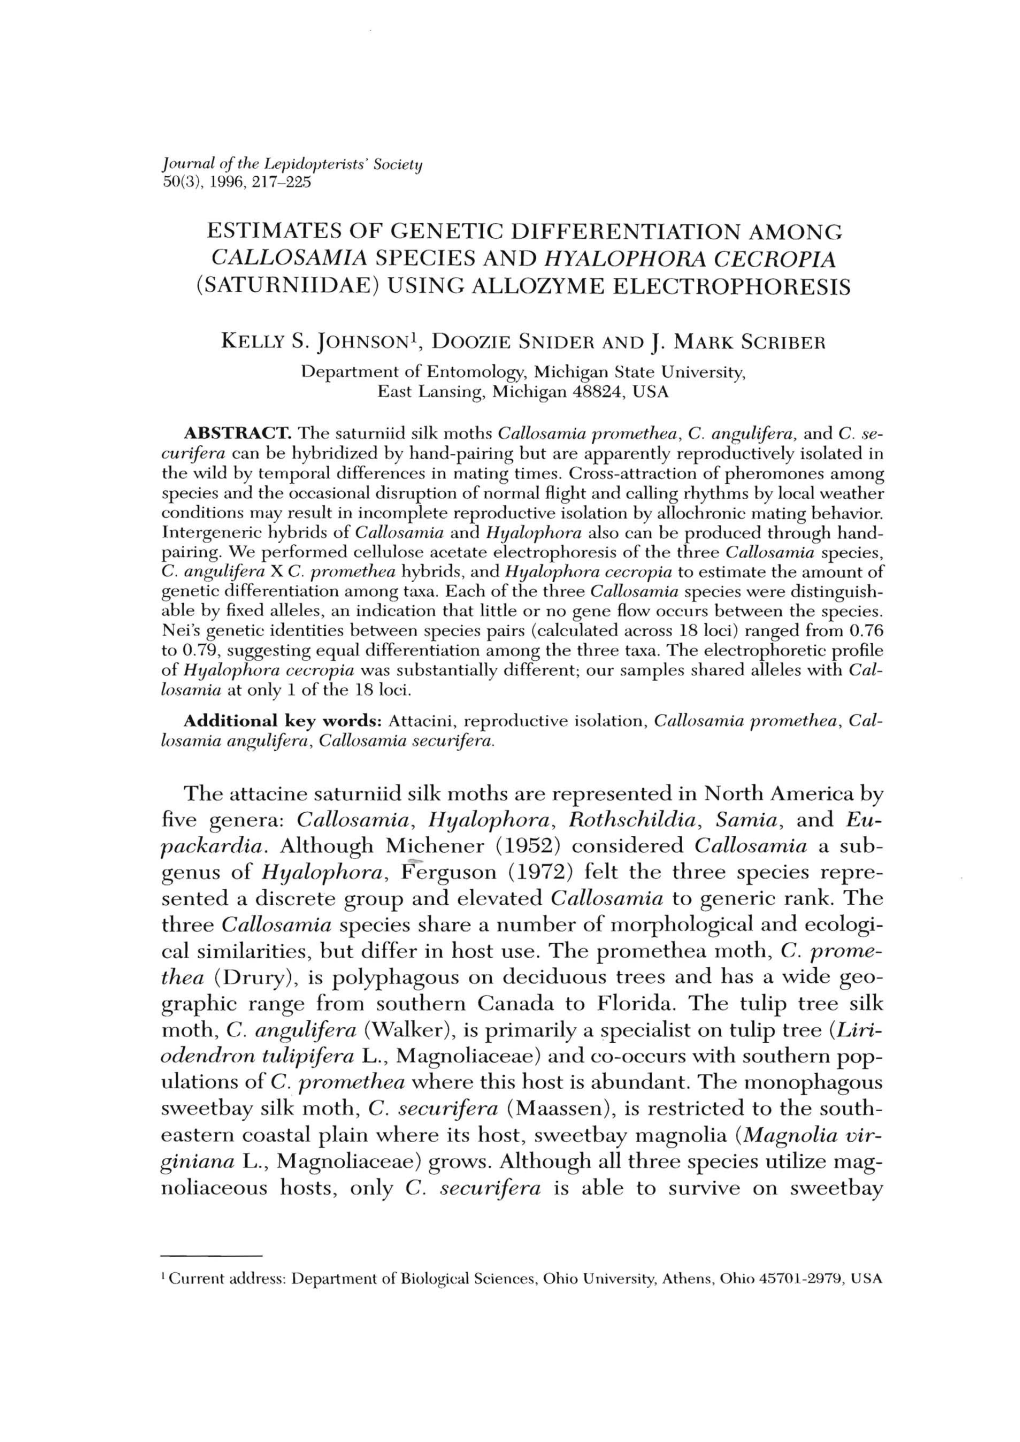 Callosamia Species and Hyalophora Cecropia (Saturniidae) Using Allozyme Electrophoresis